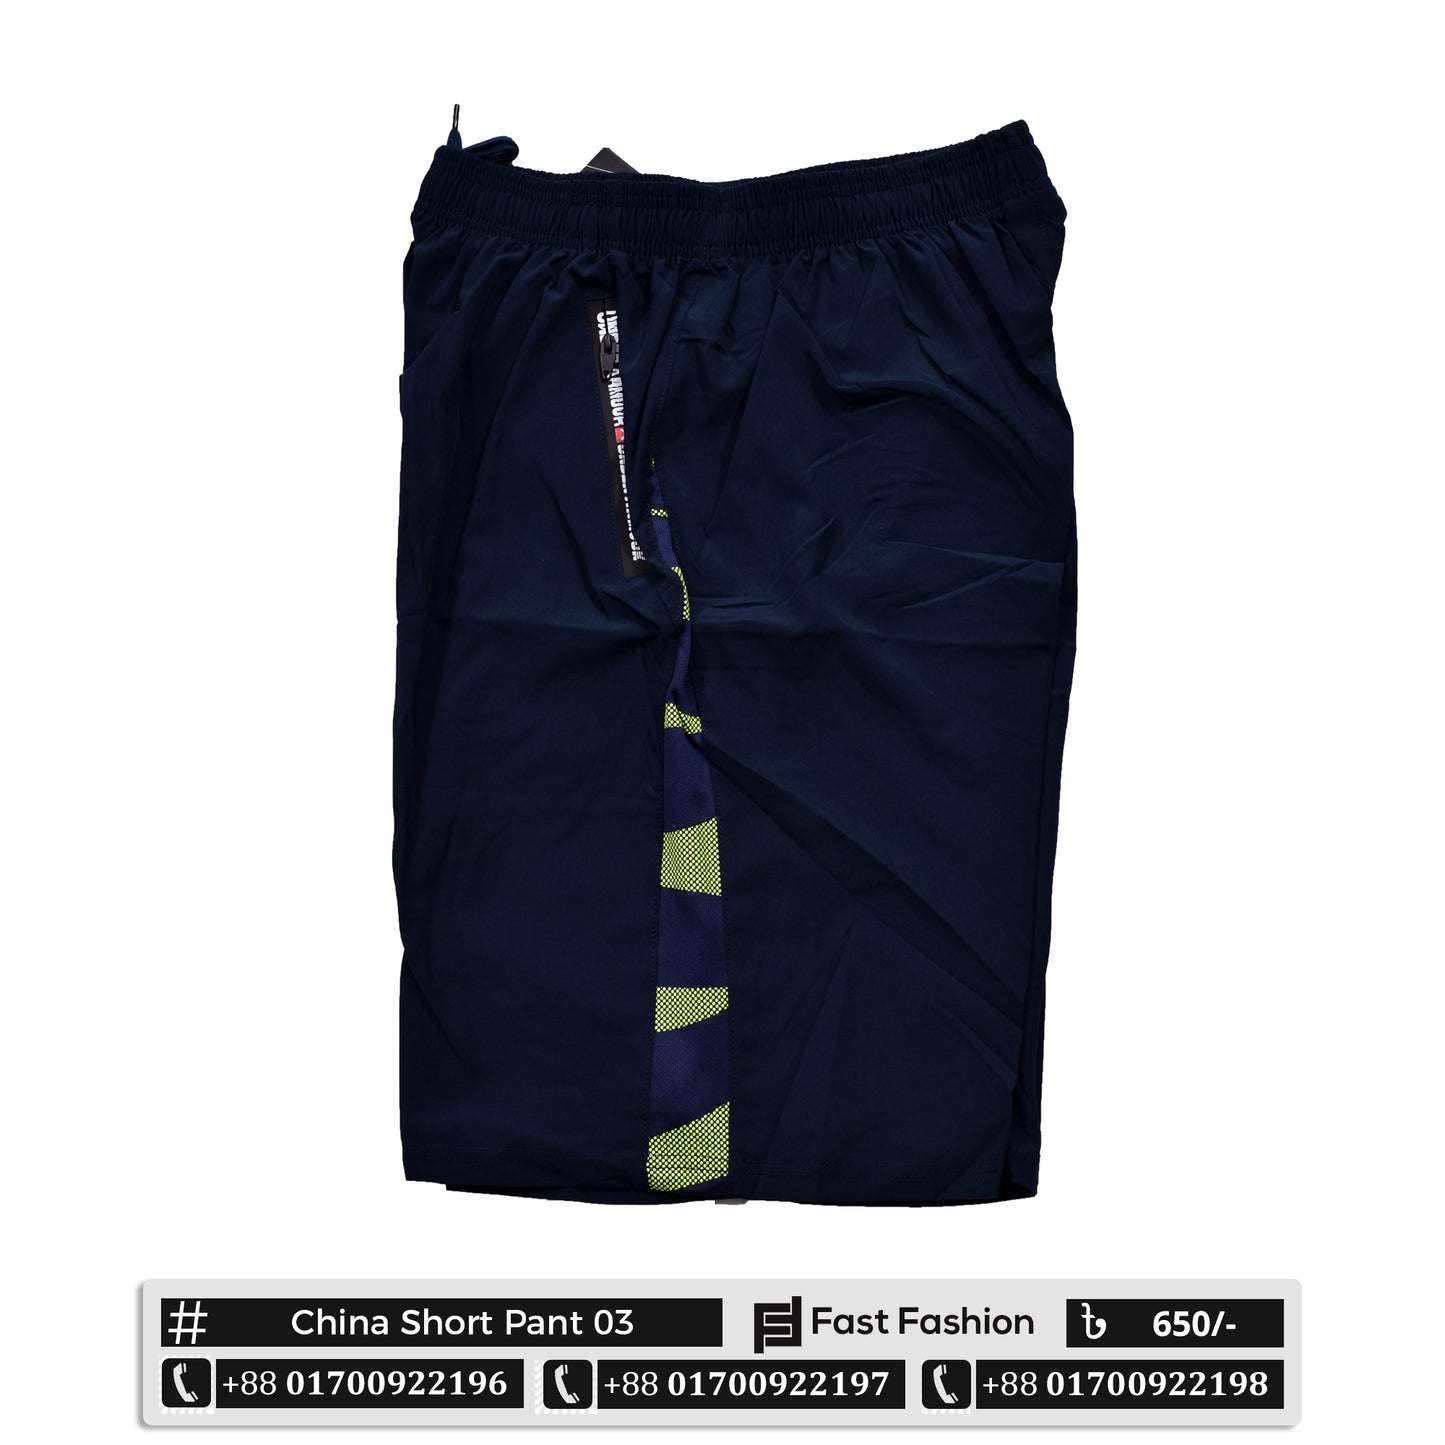 China Short Pant | Premium Quality Short Pant | China Short Pant 03